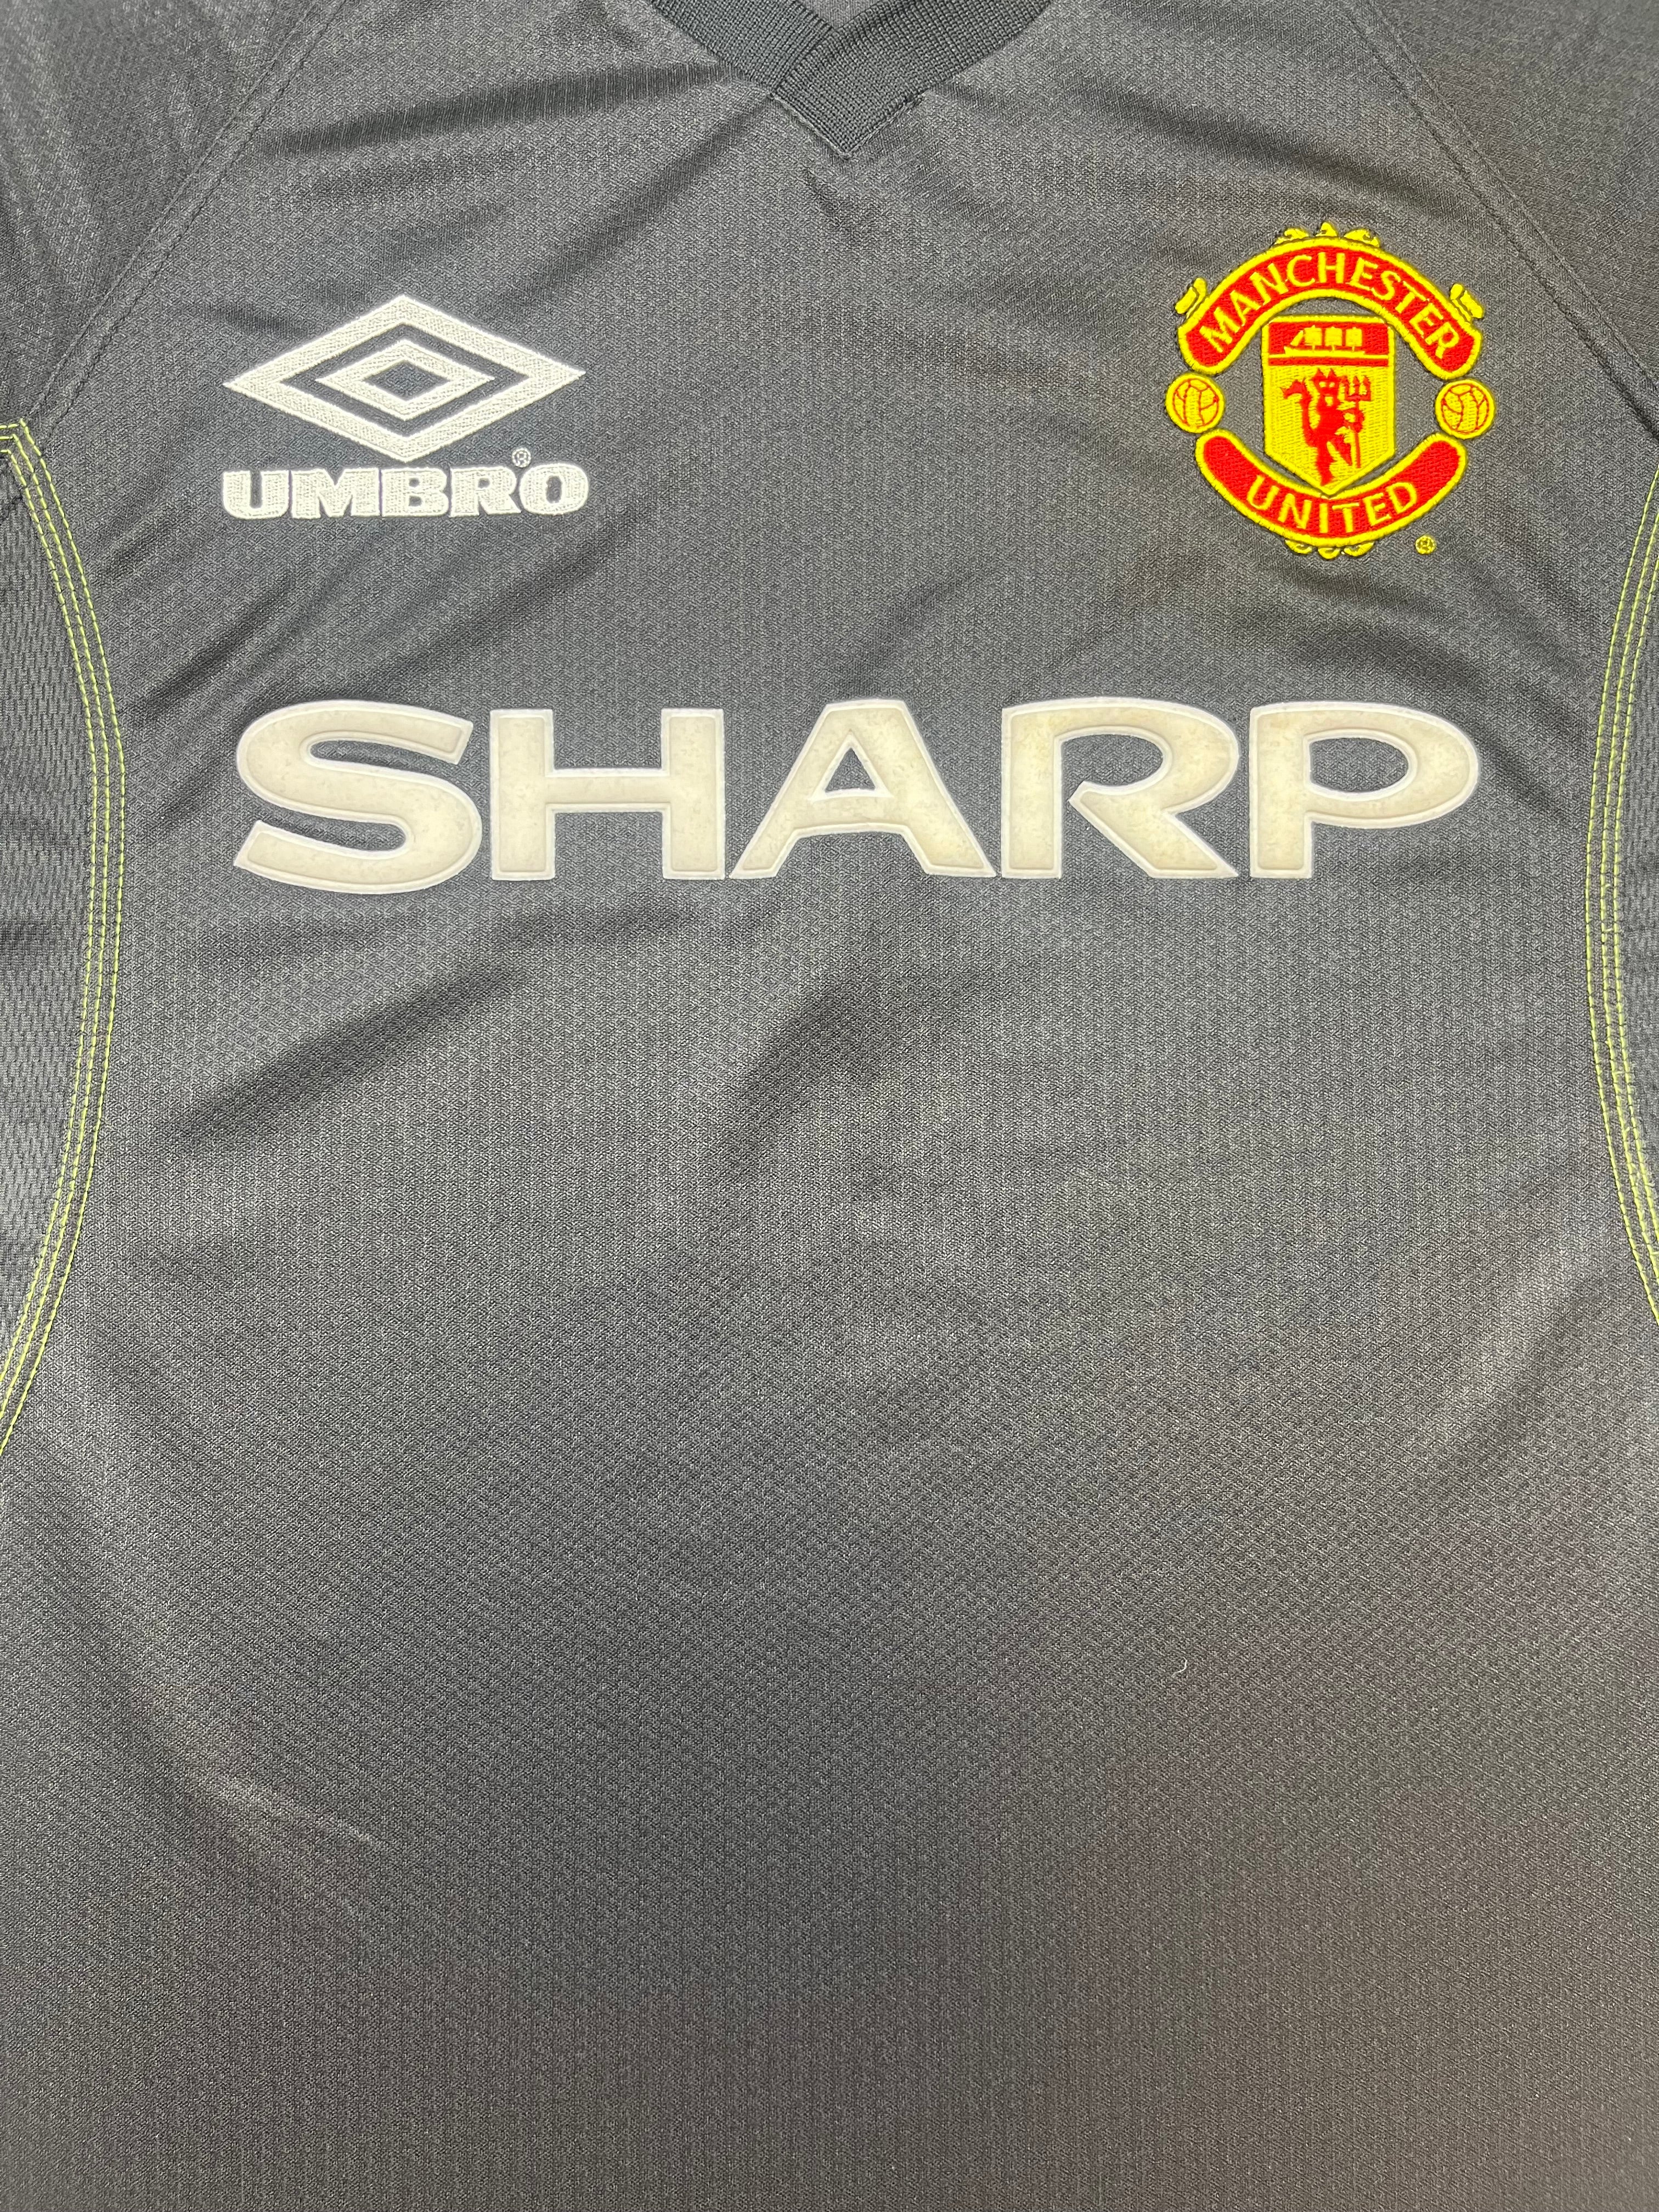 1998/99 Manchester United Third Shirt (M) 9/10